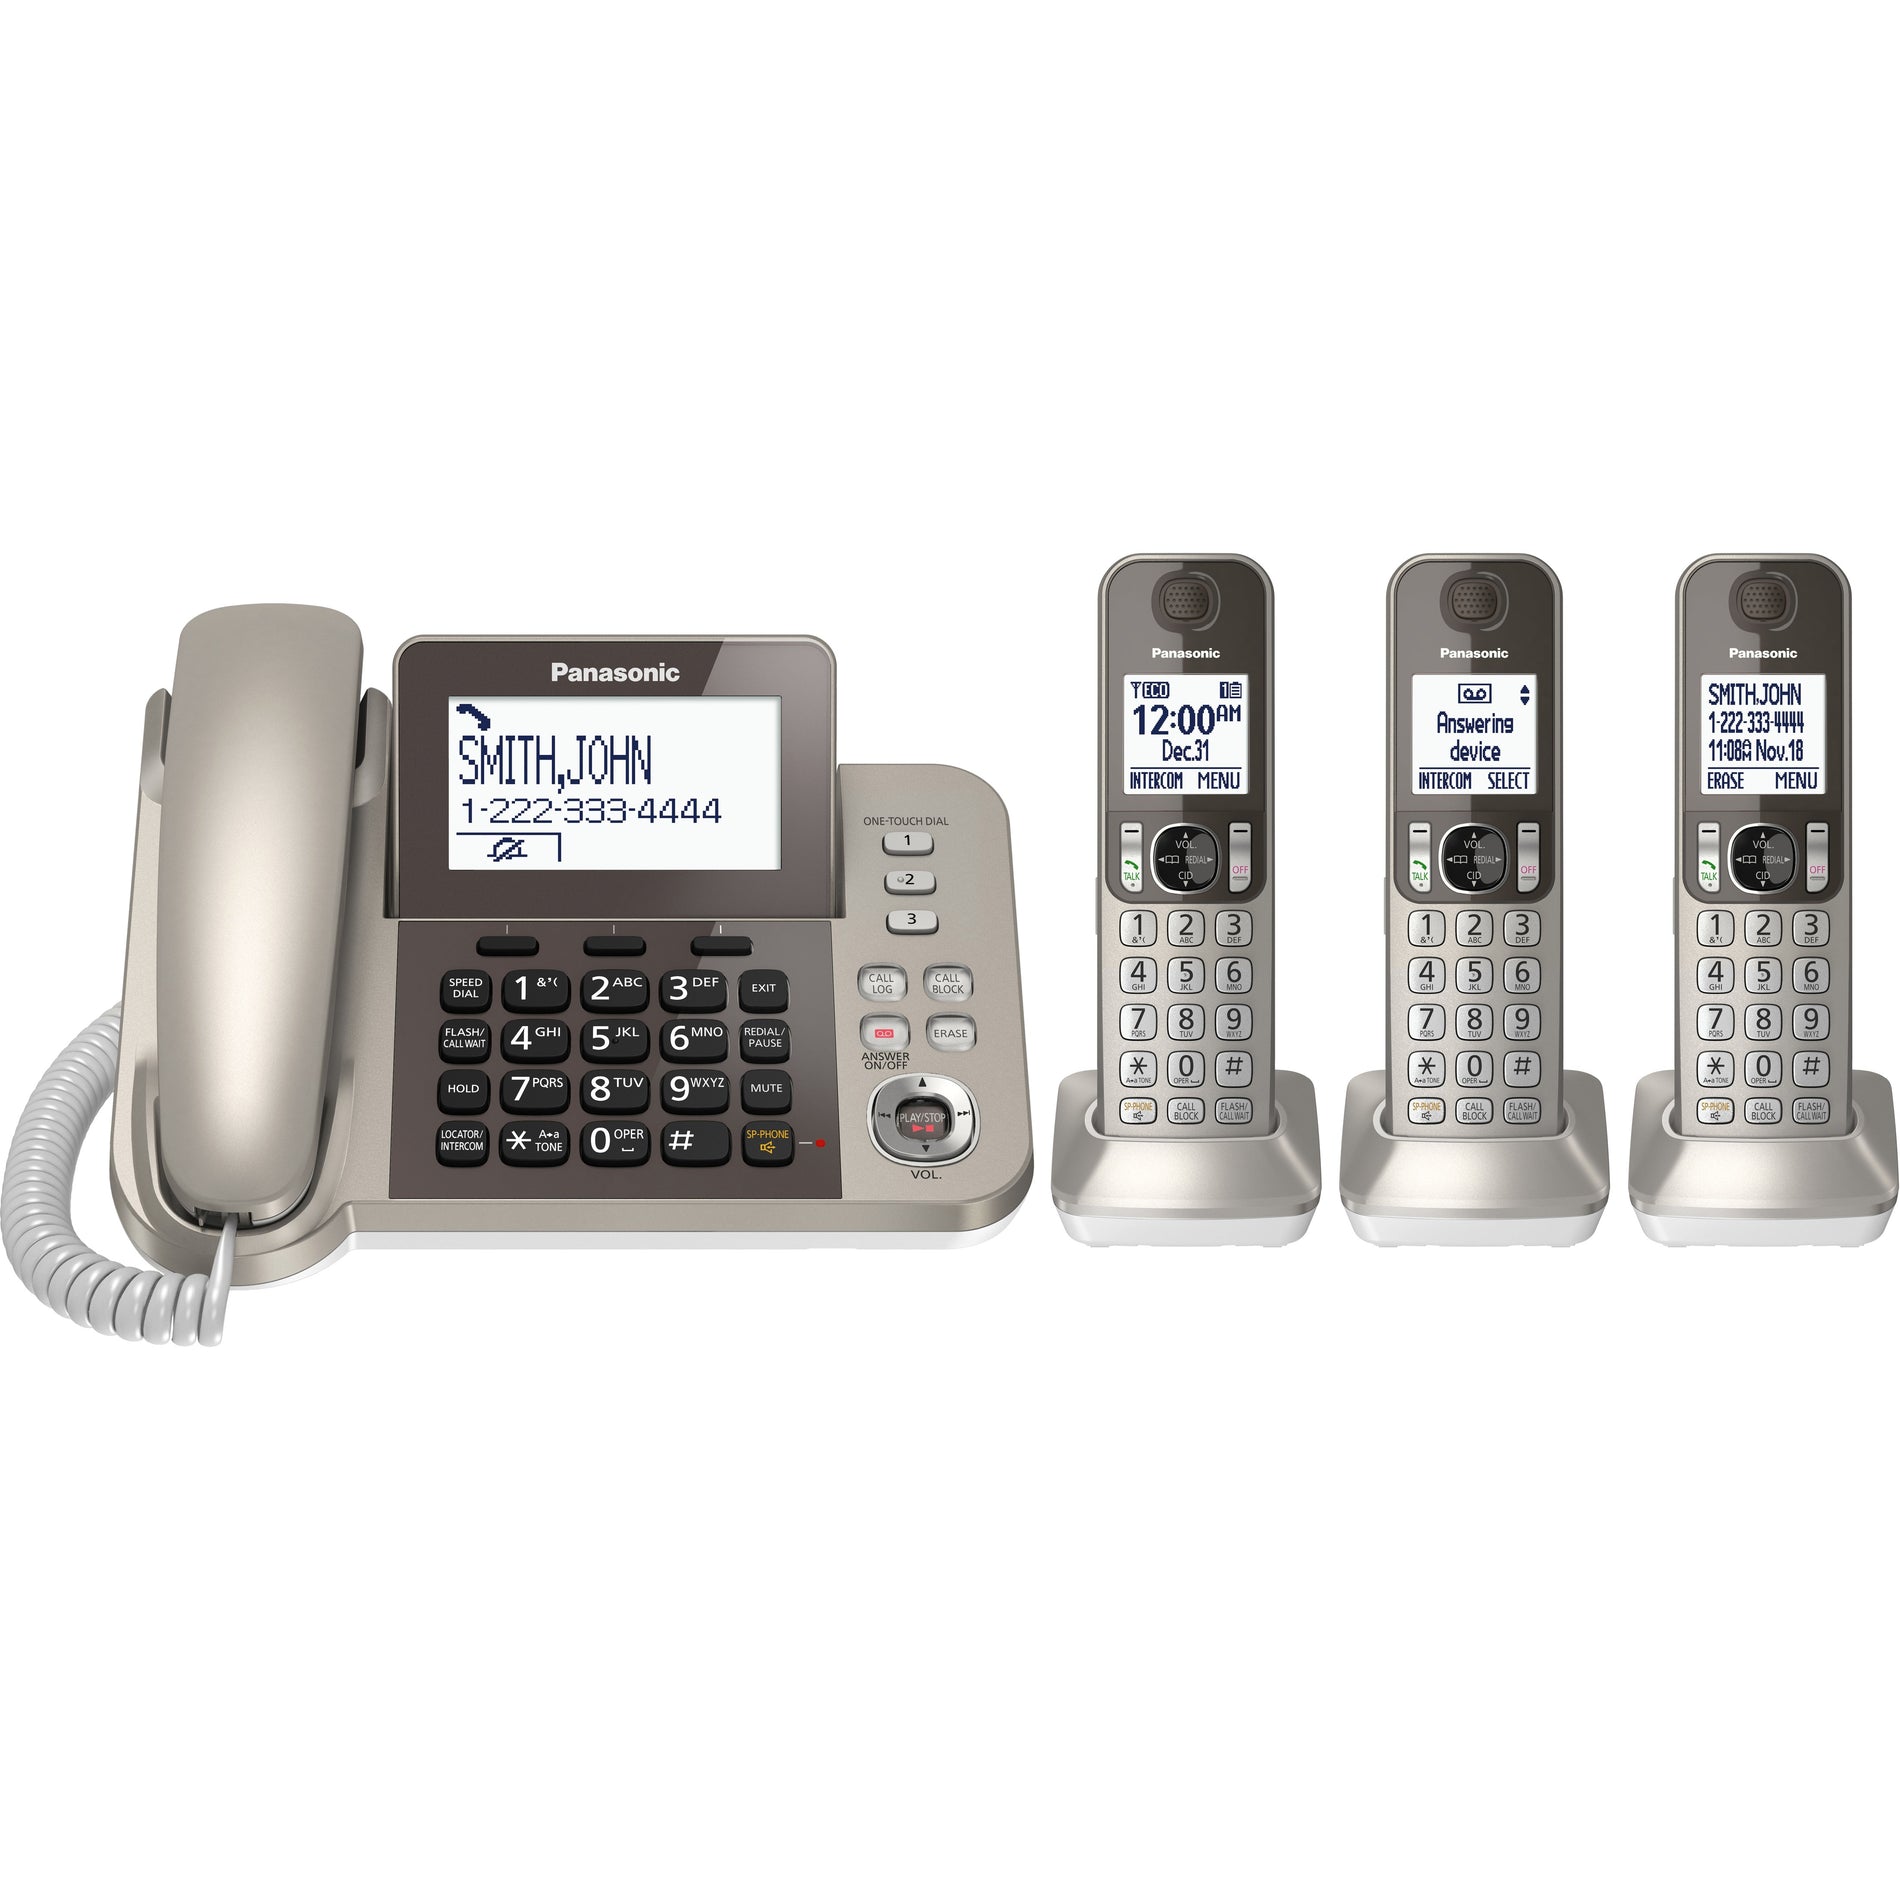 Panasonic KX-TGF353N DECT 6.0 Cordless Phone, Champagne Gold - Call Block, Speakerphone, 3 Handsets